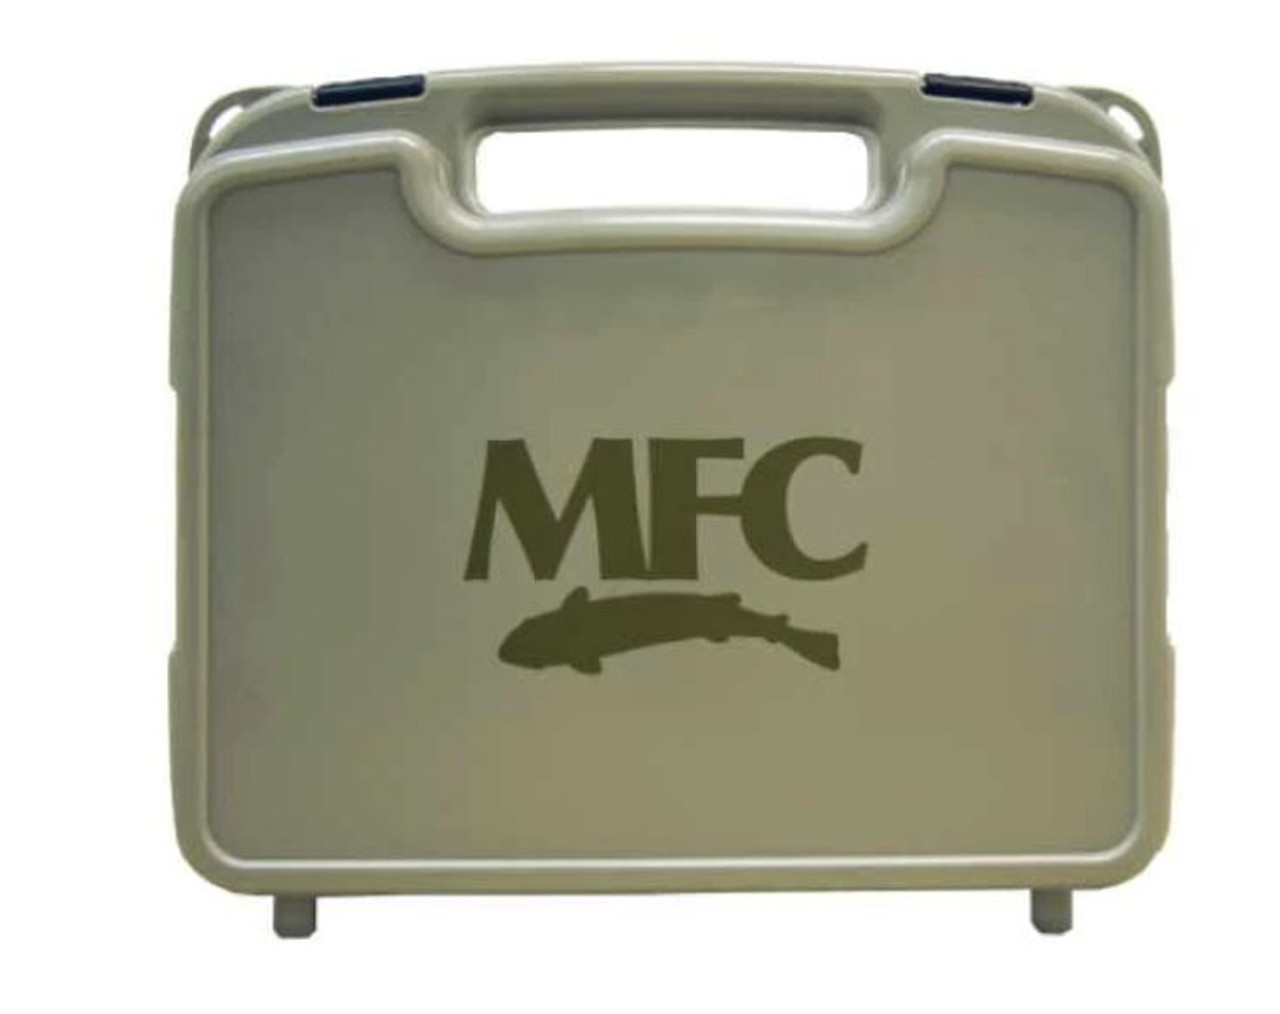 MFC BOAT BOX